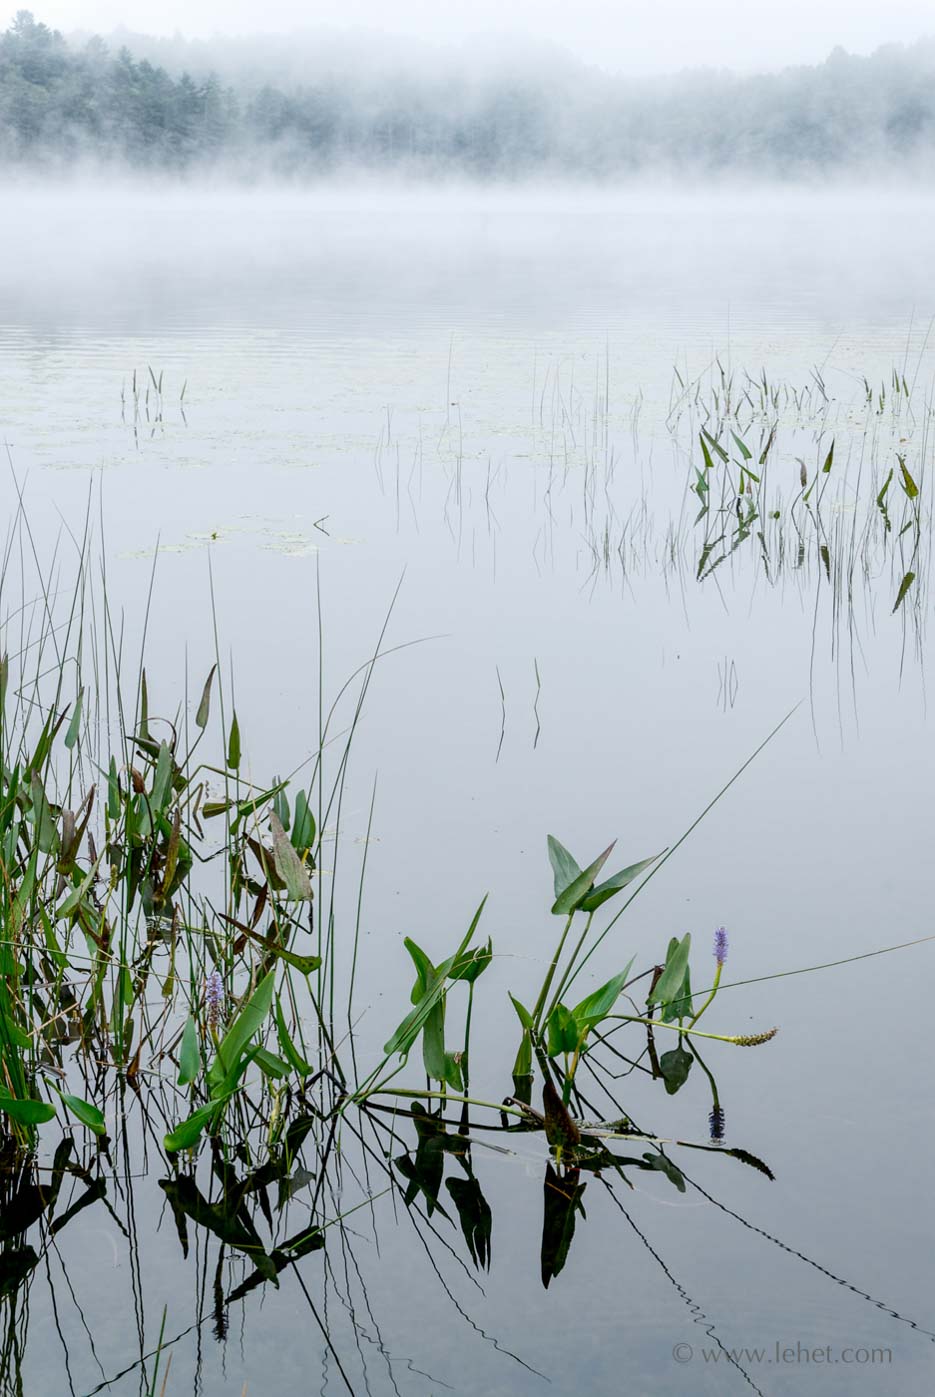 Pickerelweed with Flower, Mist, Post Pond